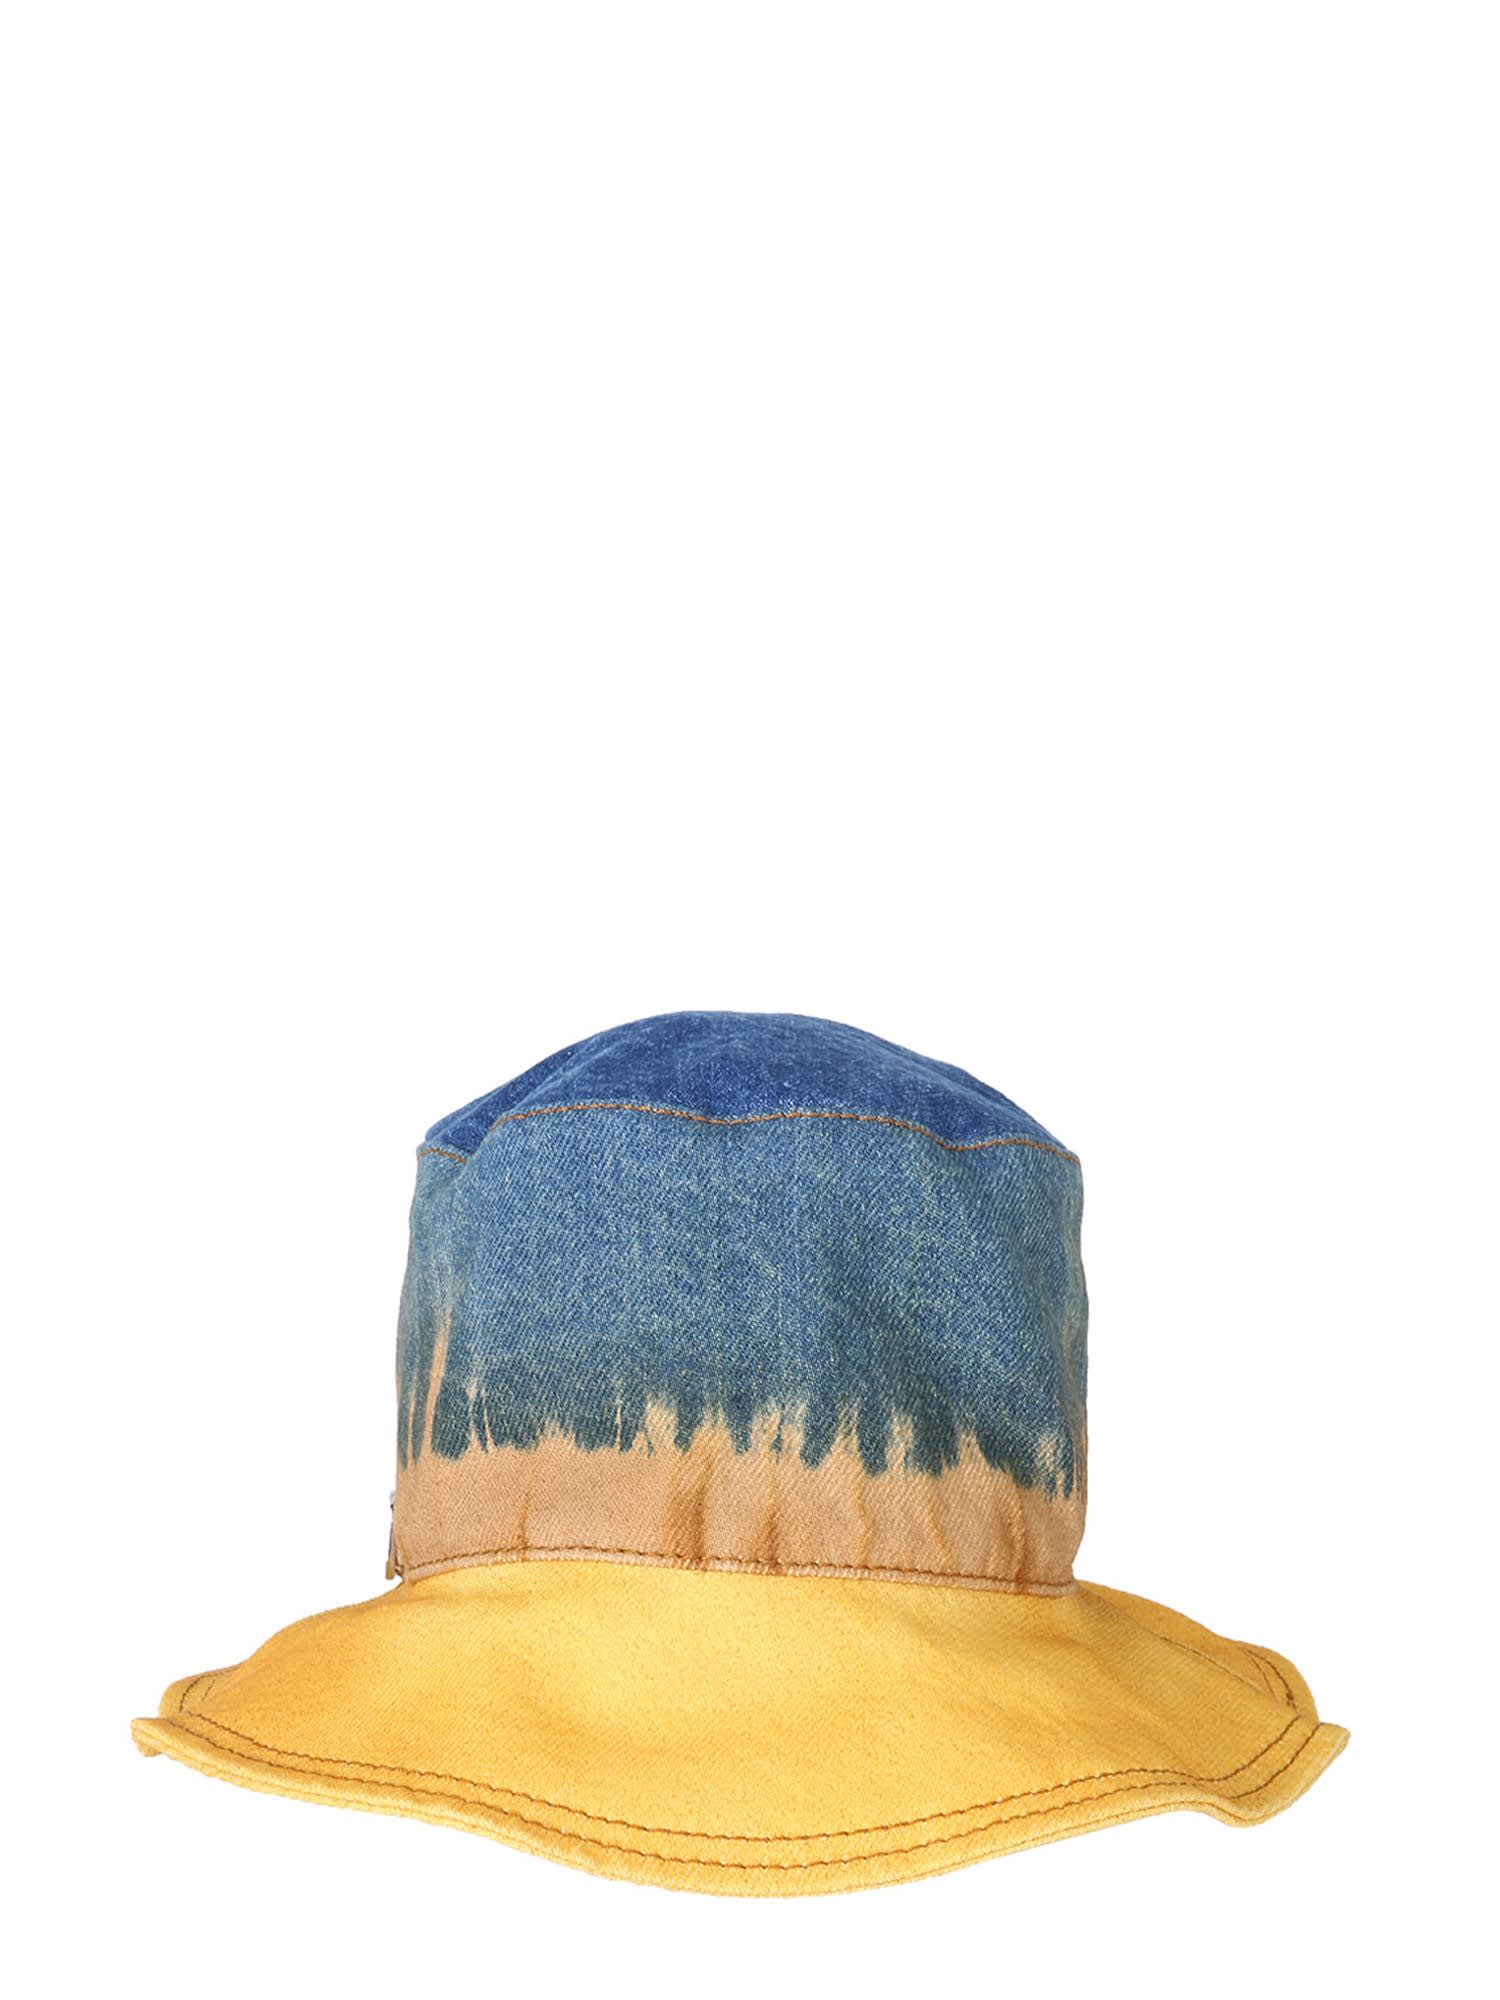 Alberta Ferretti Bucket Hat With Tie Dye Print